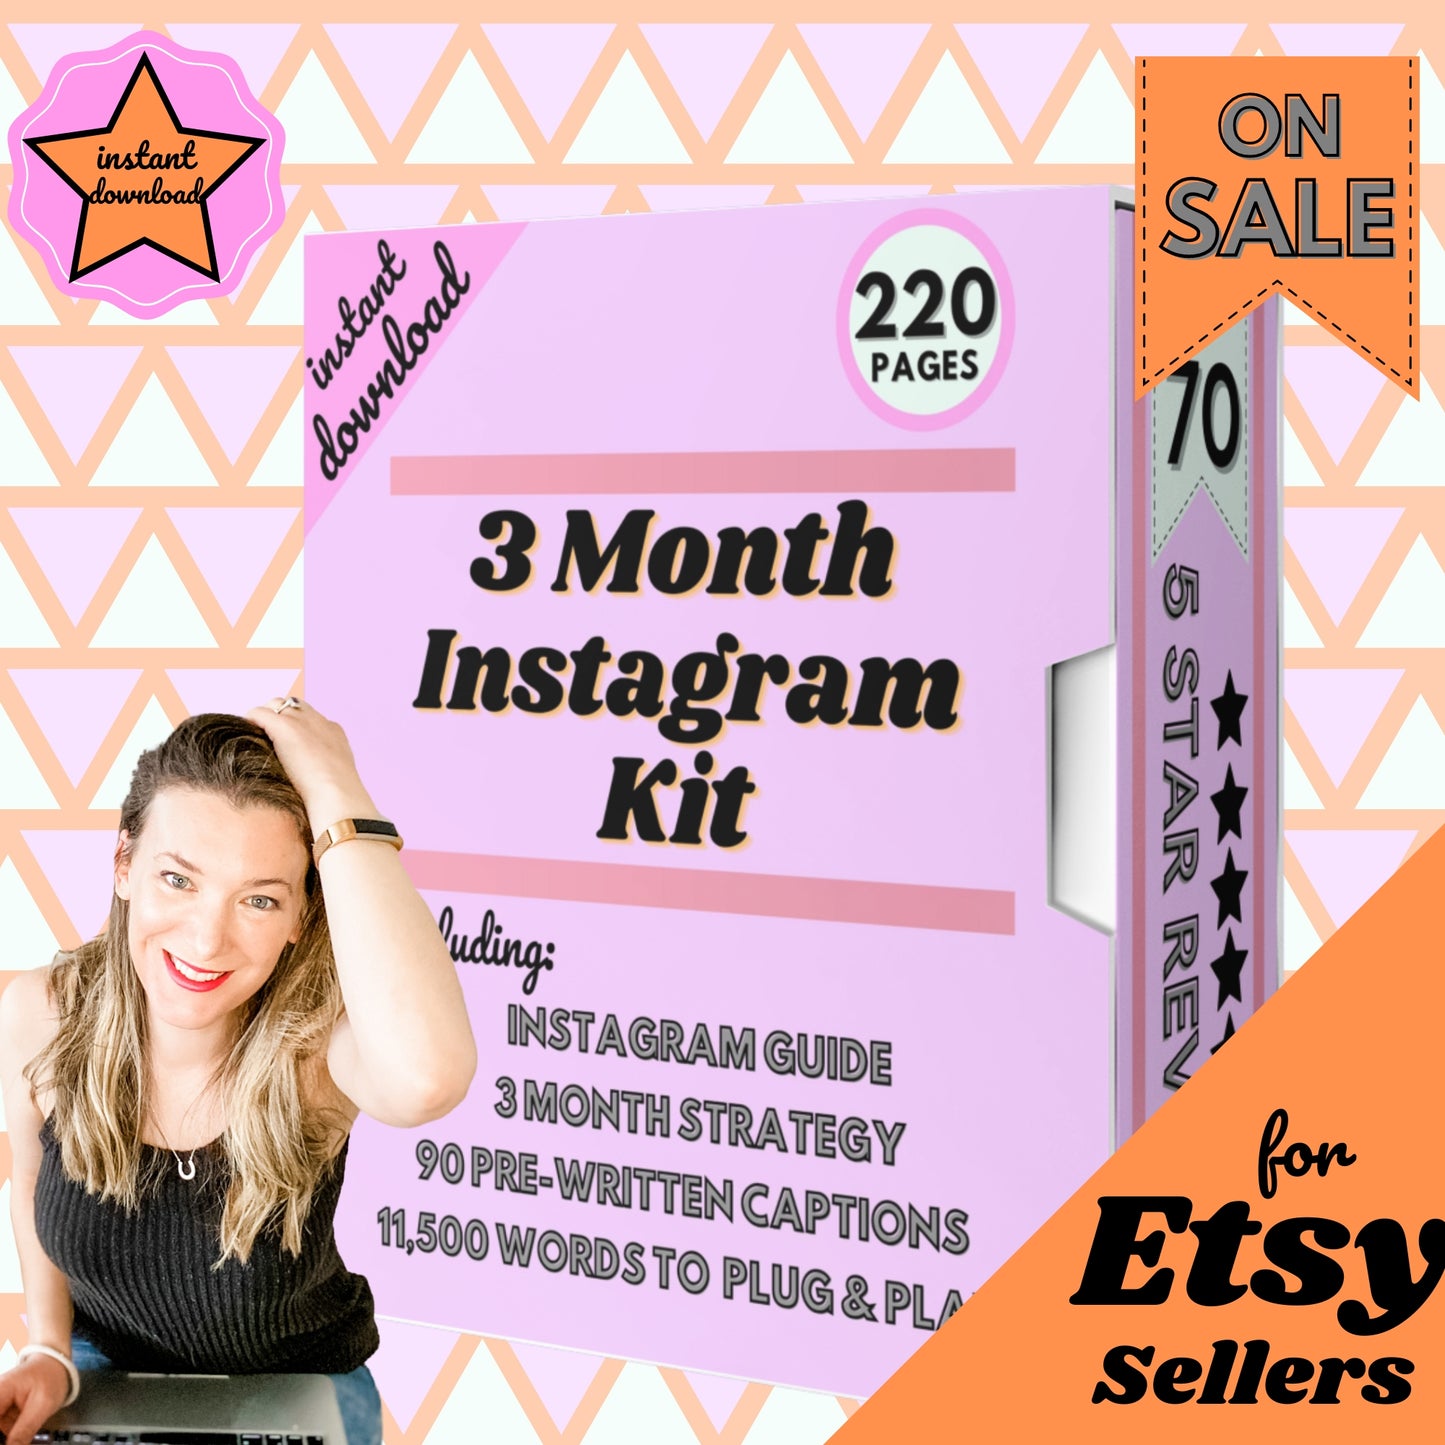 3 Month Instagram Kit for Etsy Sellers - Instant download